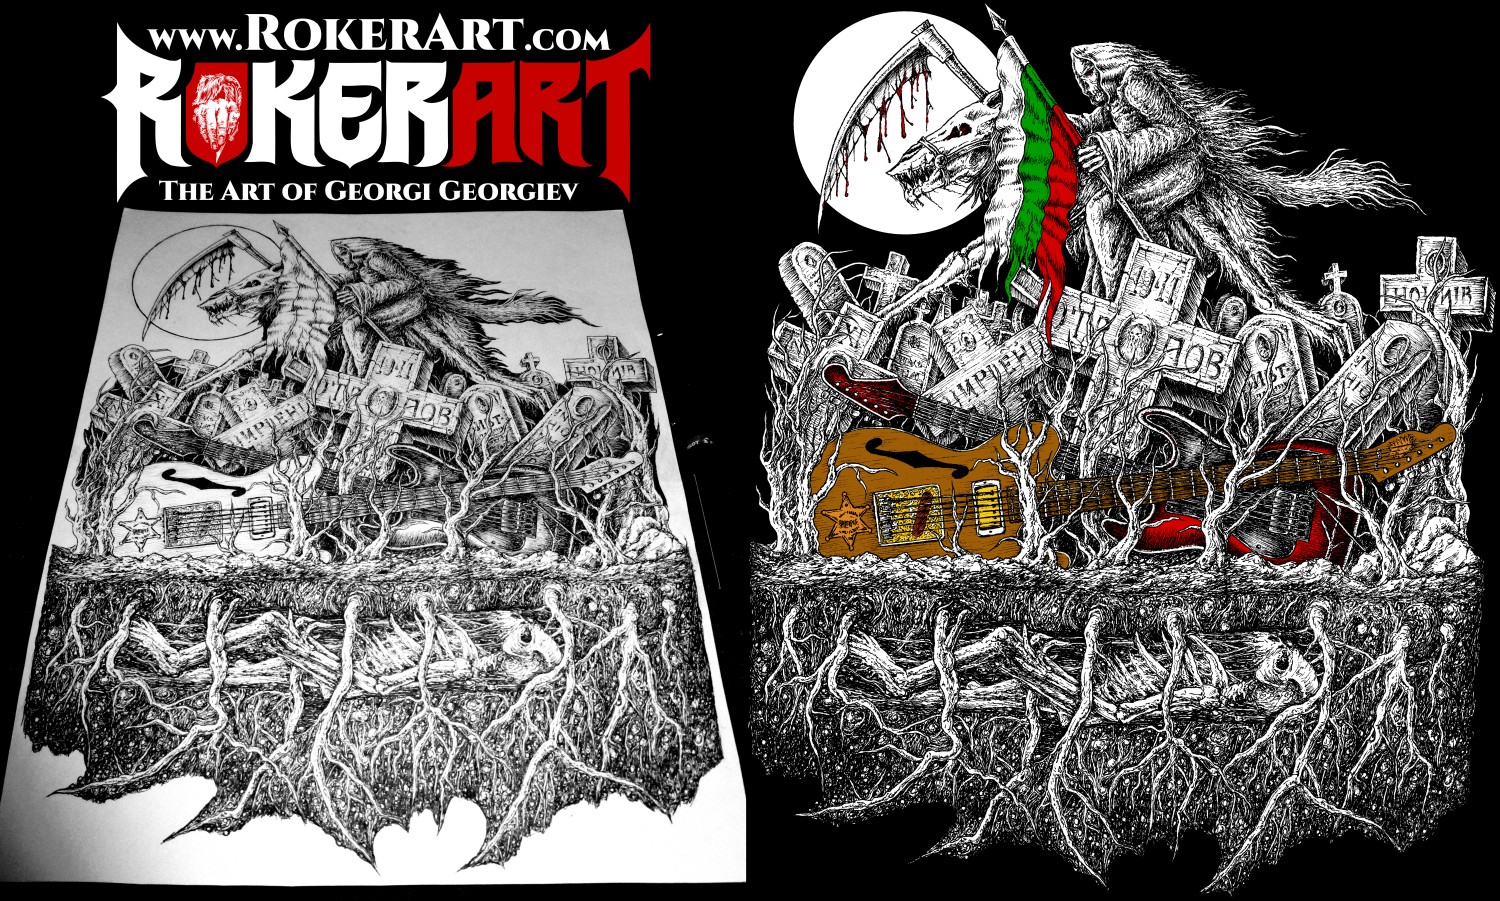 Black Metal Album Art and T-shirt Artworks for Sale